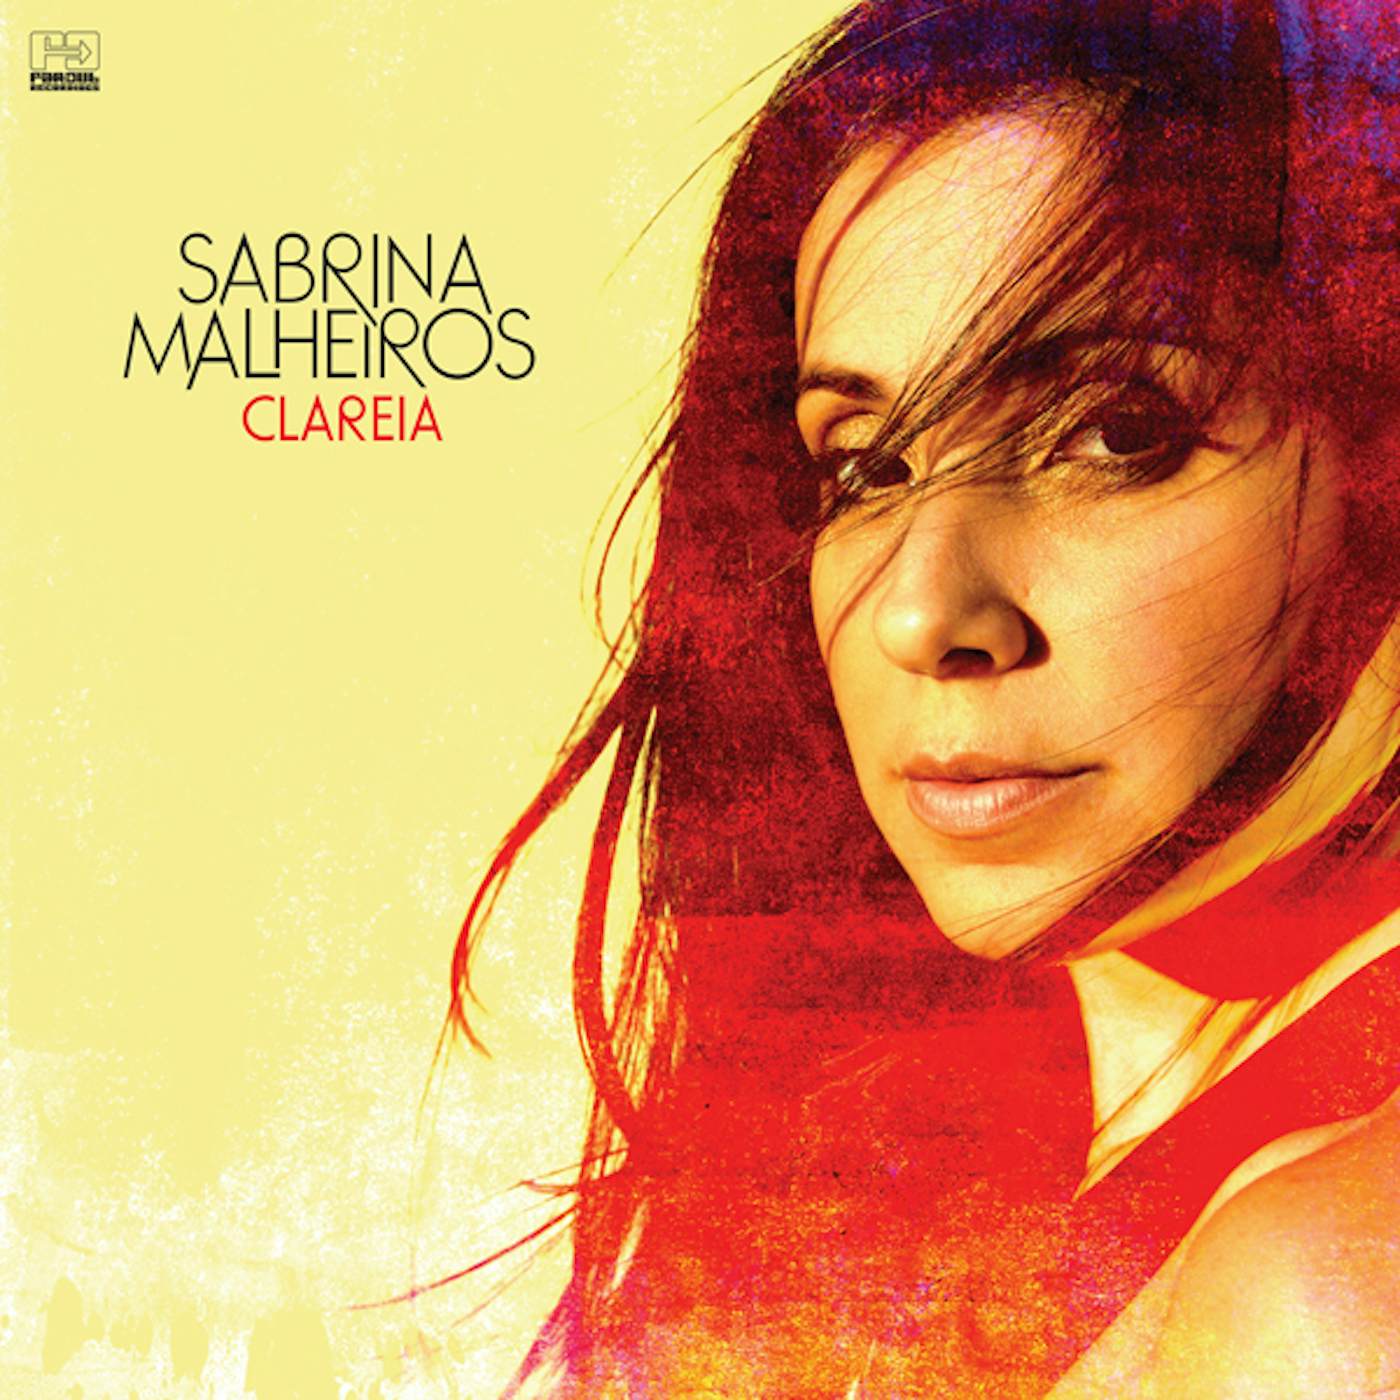 Sabrina Malheiros Clareia Vinyl Record